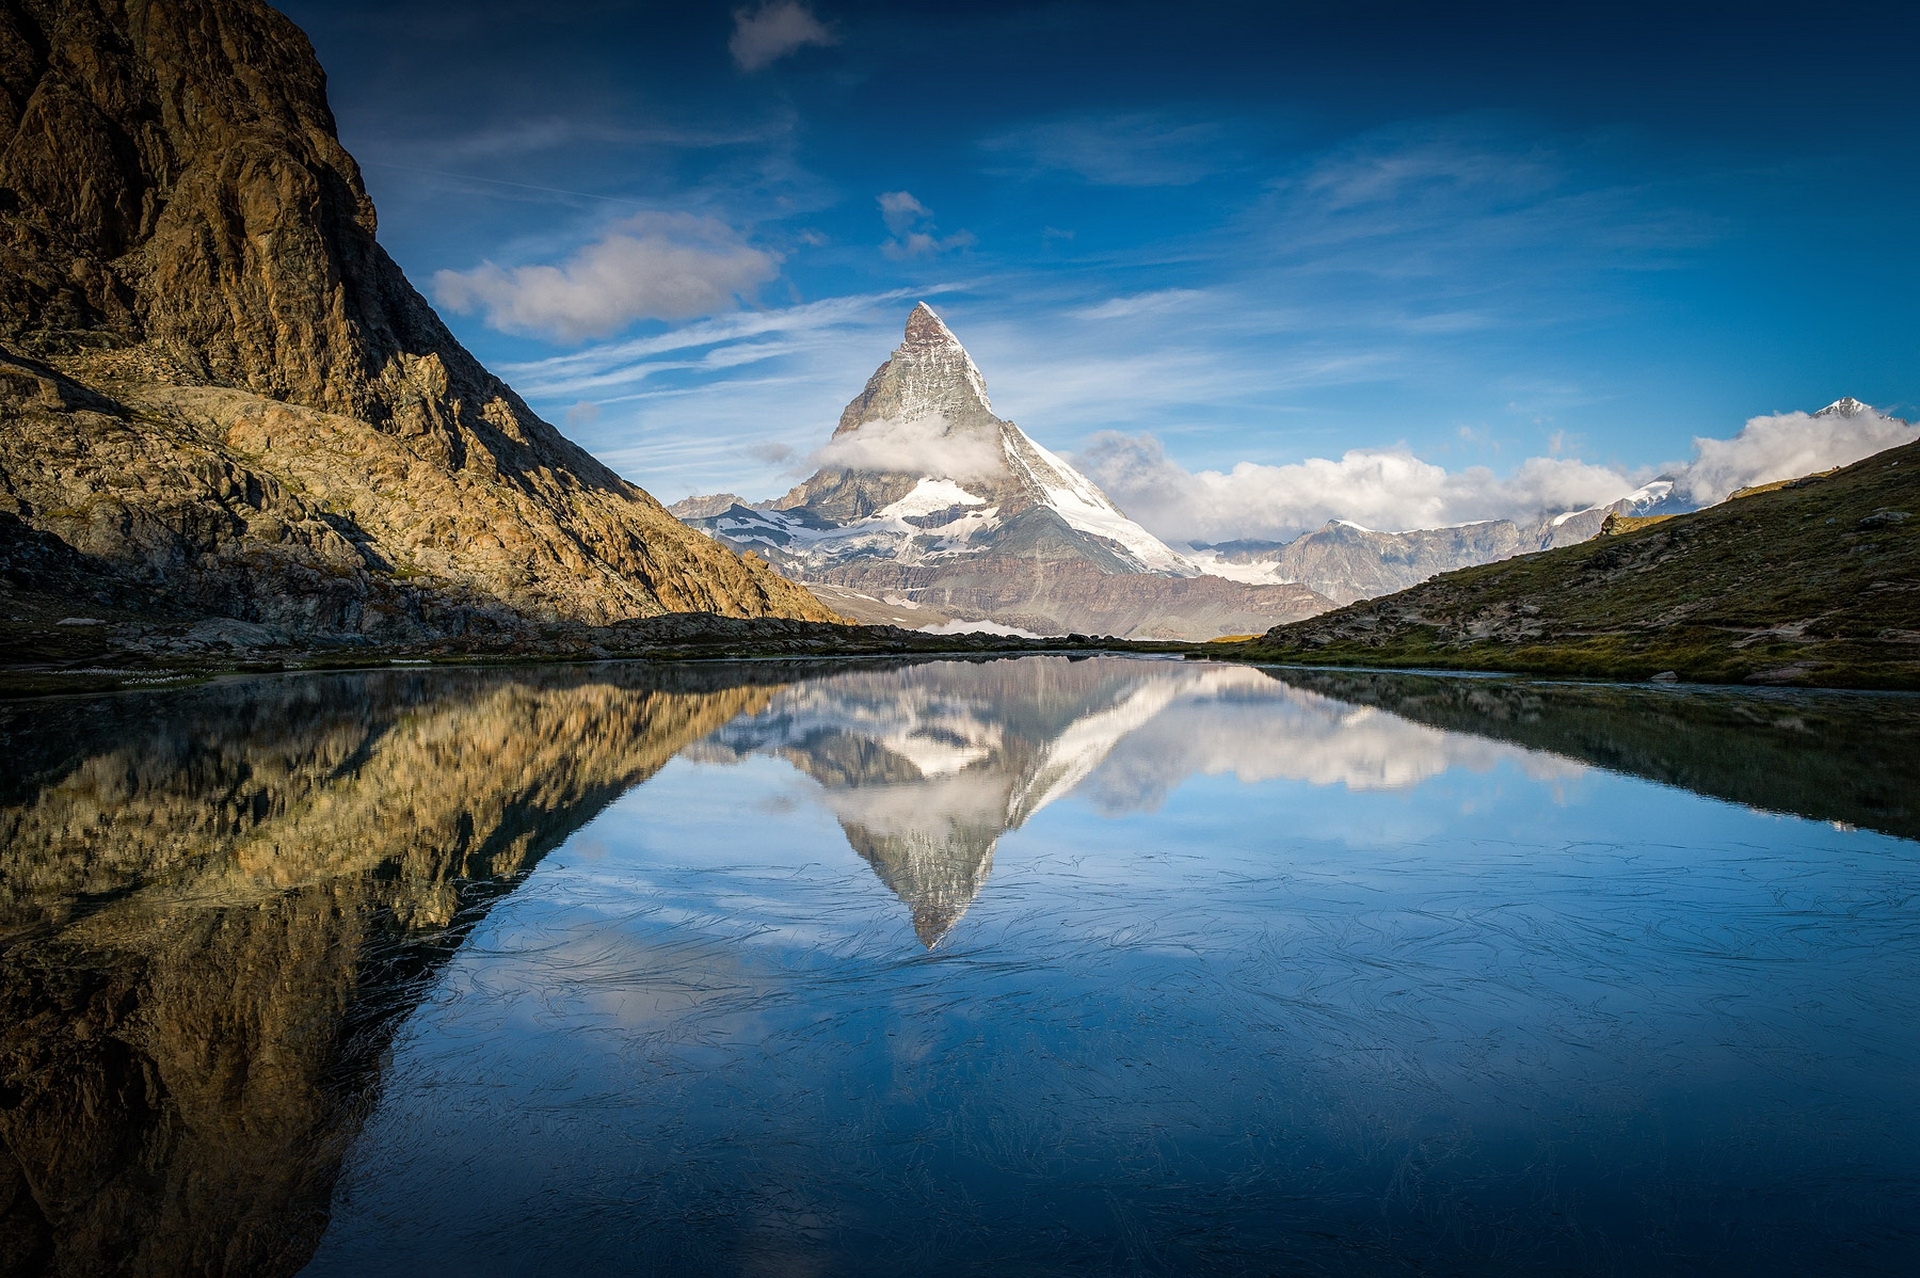 alps, mountains, nature, lake, reflection, matterhorn